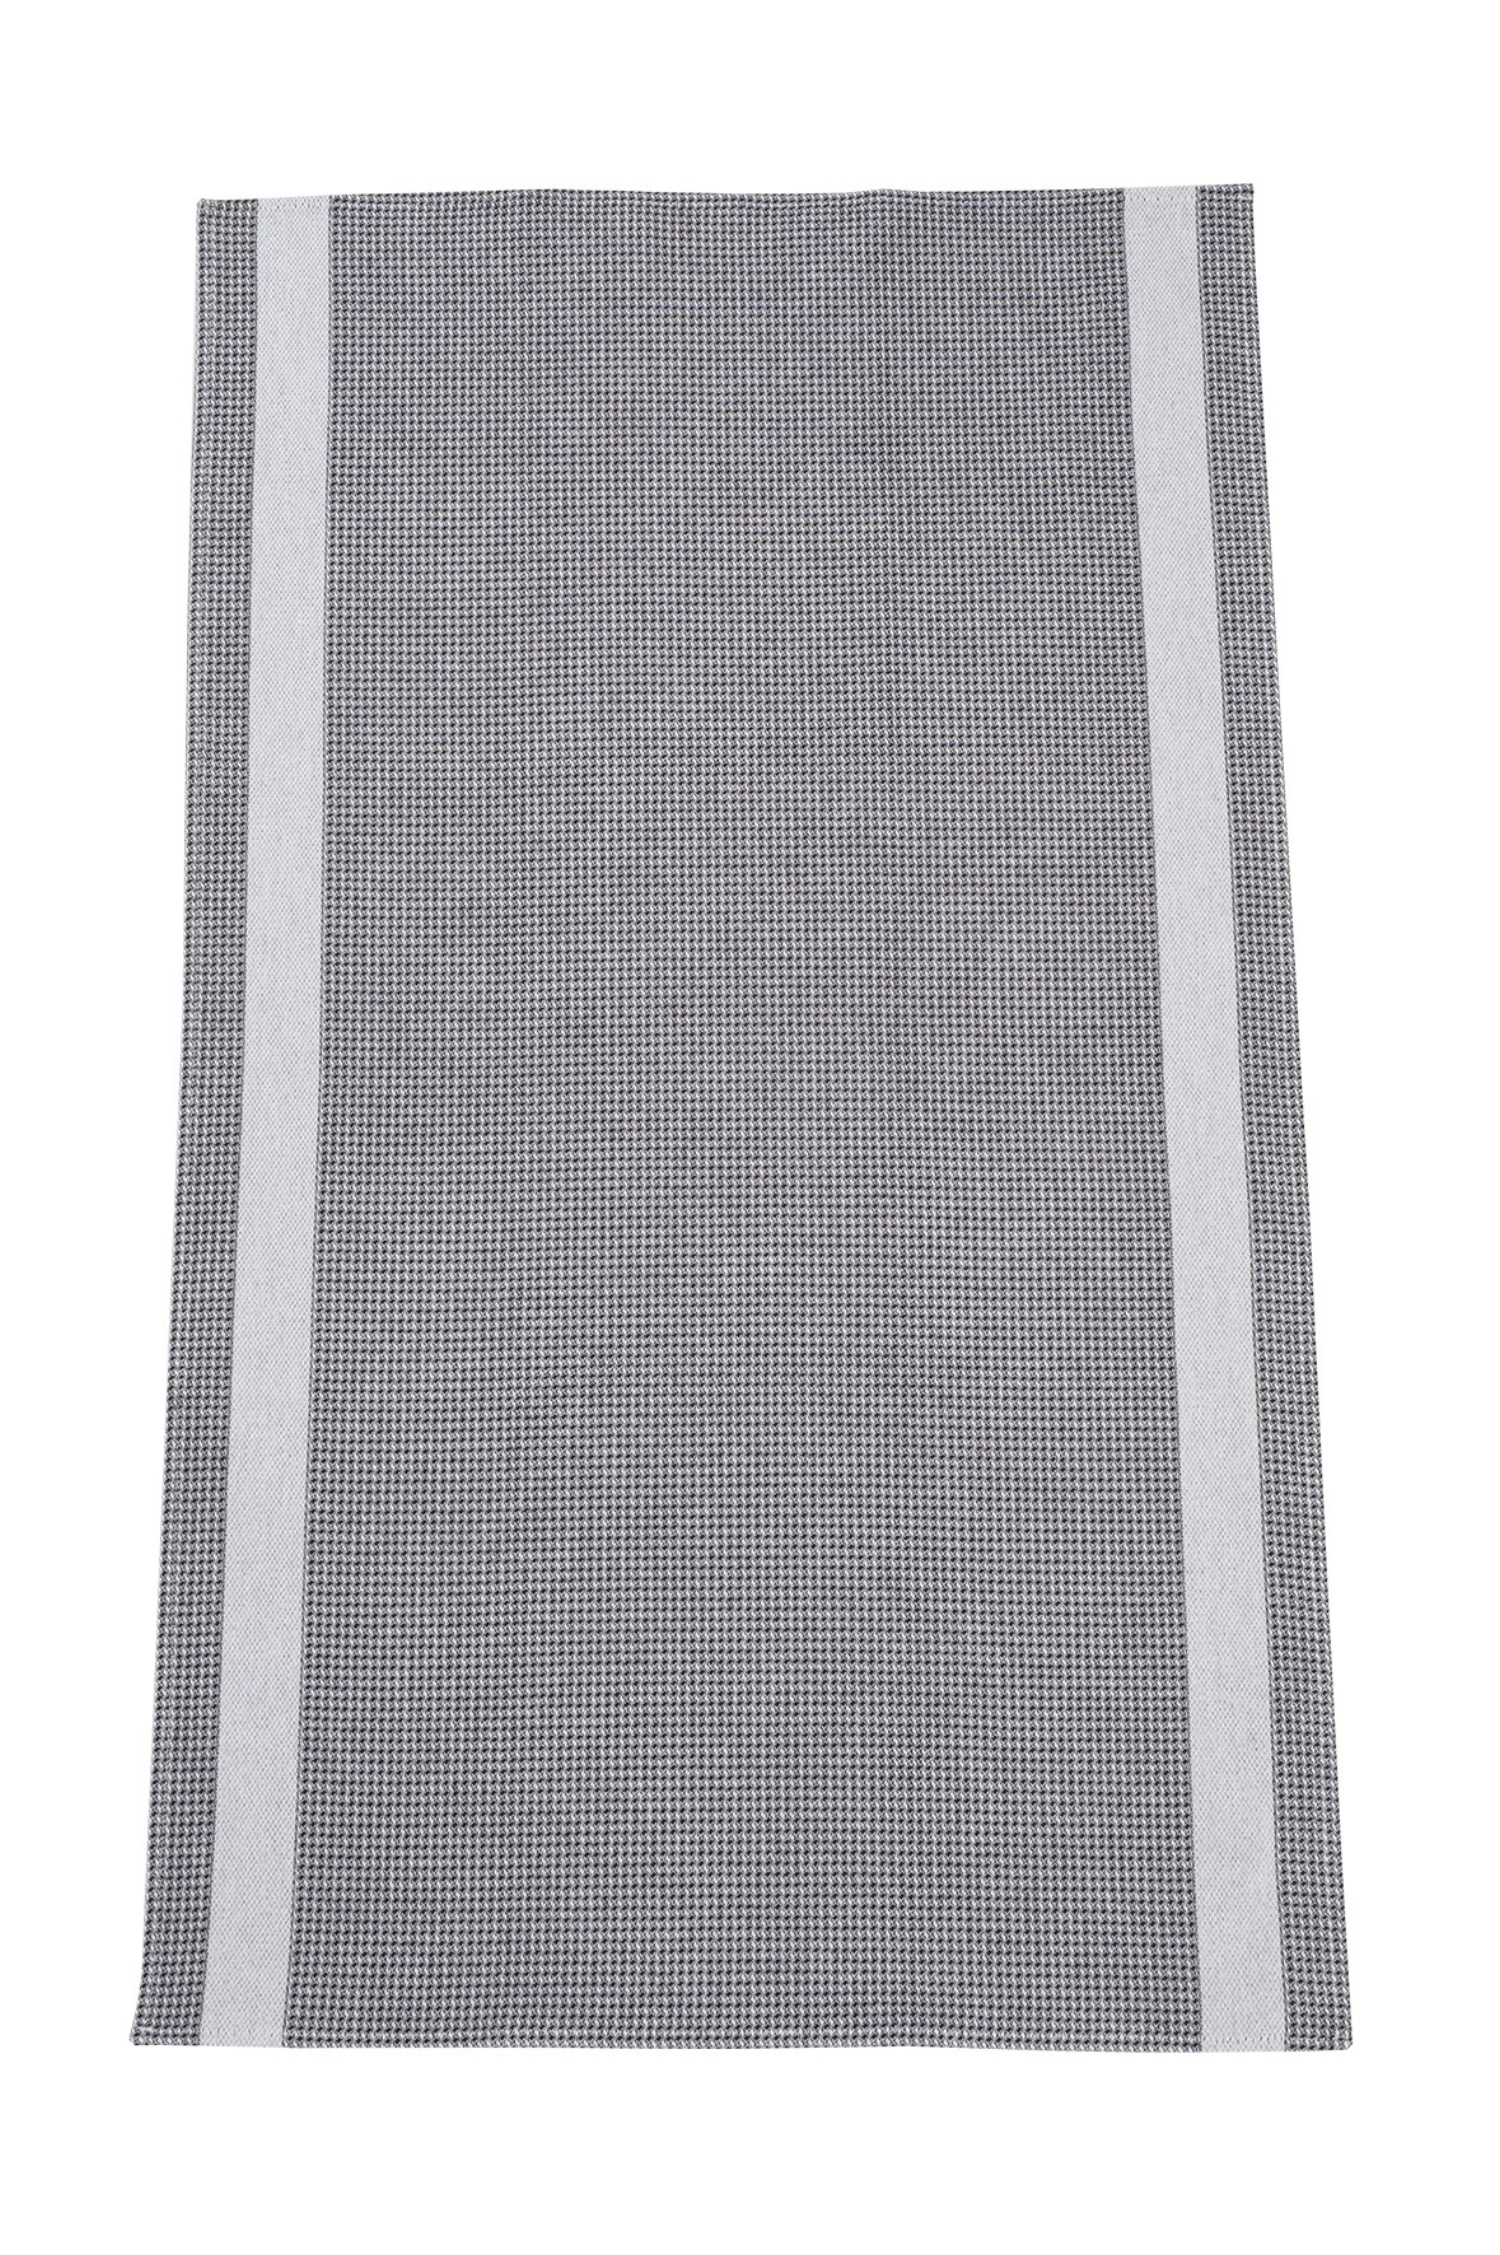 Chiffon gaufré 50x85cm, noir avec bord blanc